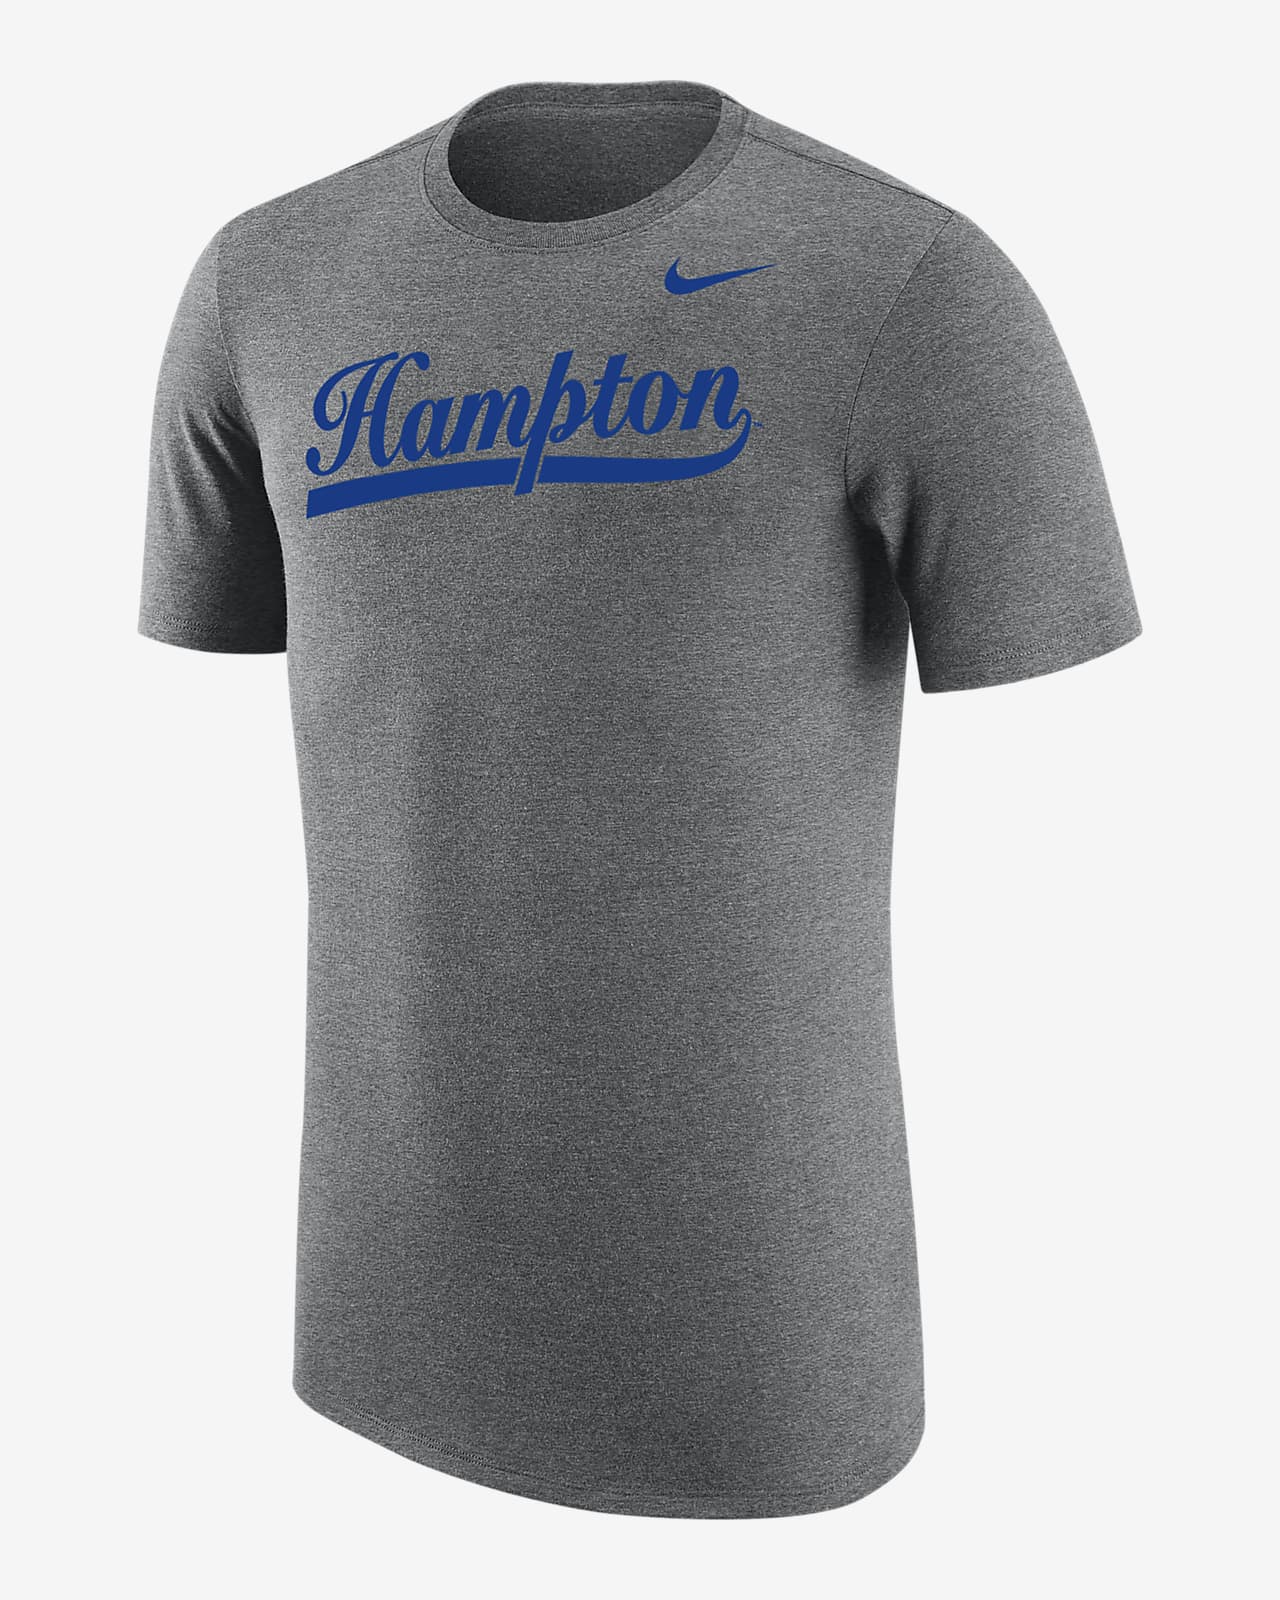 Playera universitaria Nike para hombre Hampton